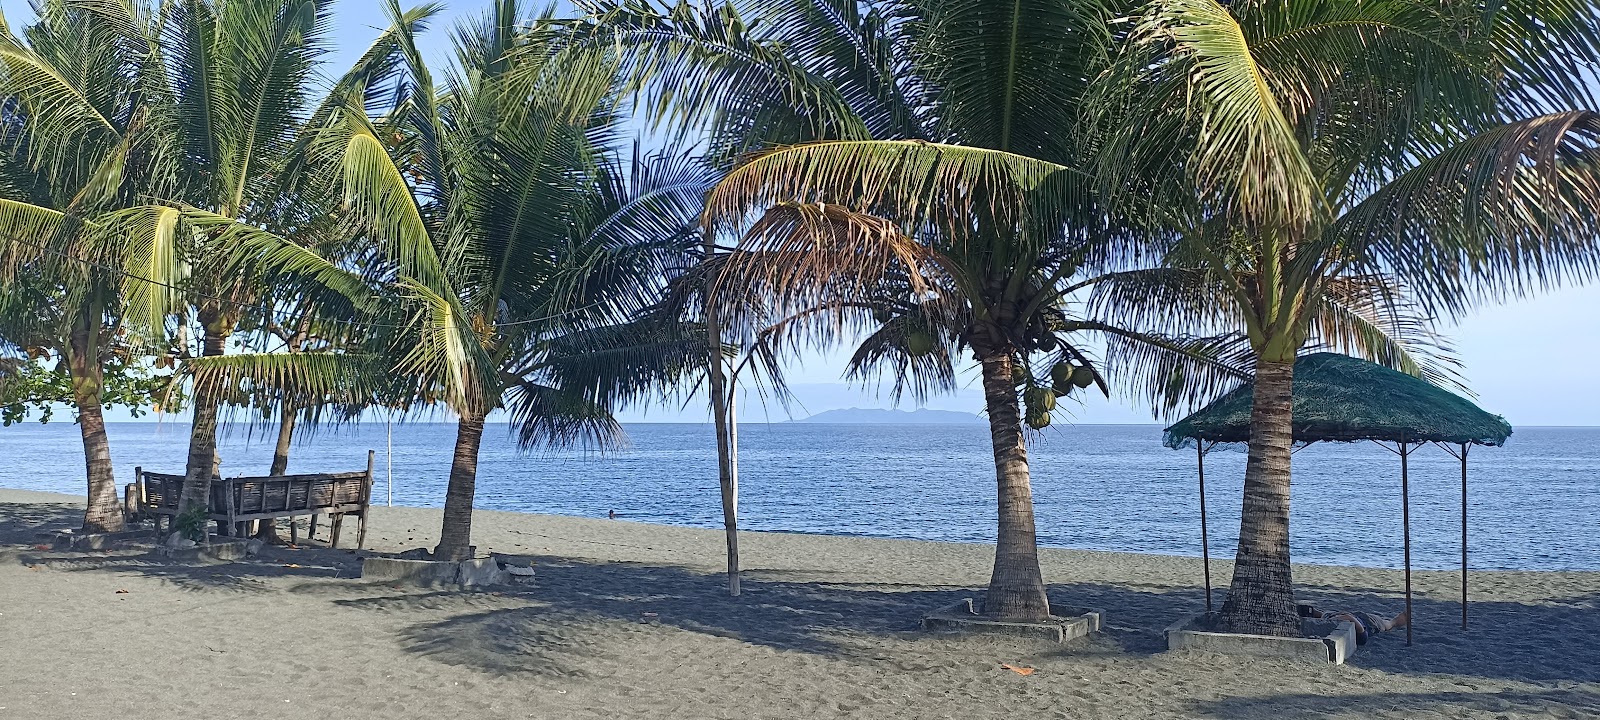 Photo of Pinamalayan Beach - popular place among relax connoisseurs